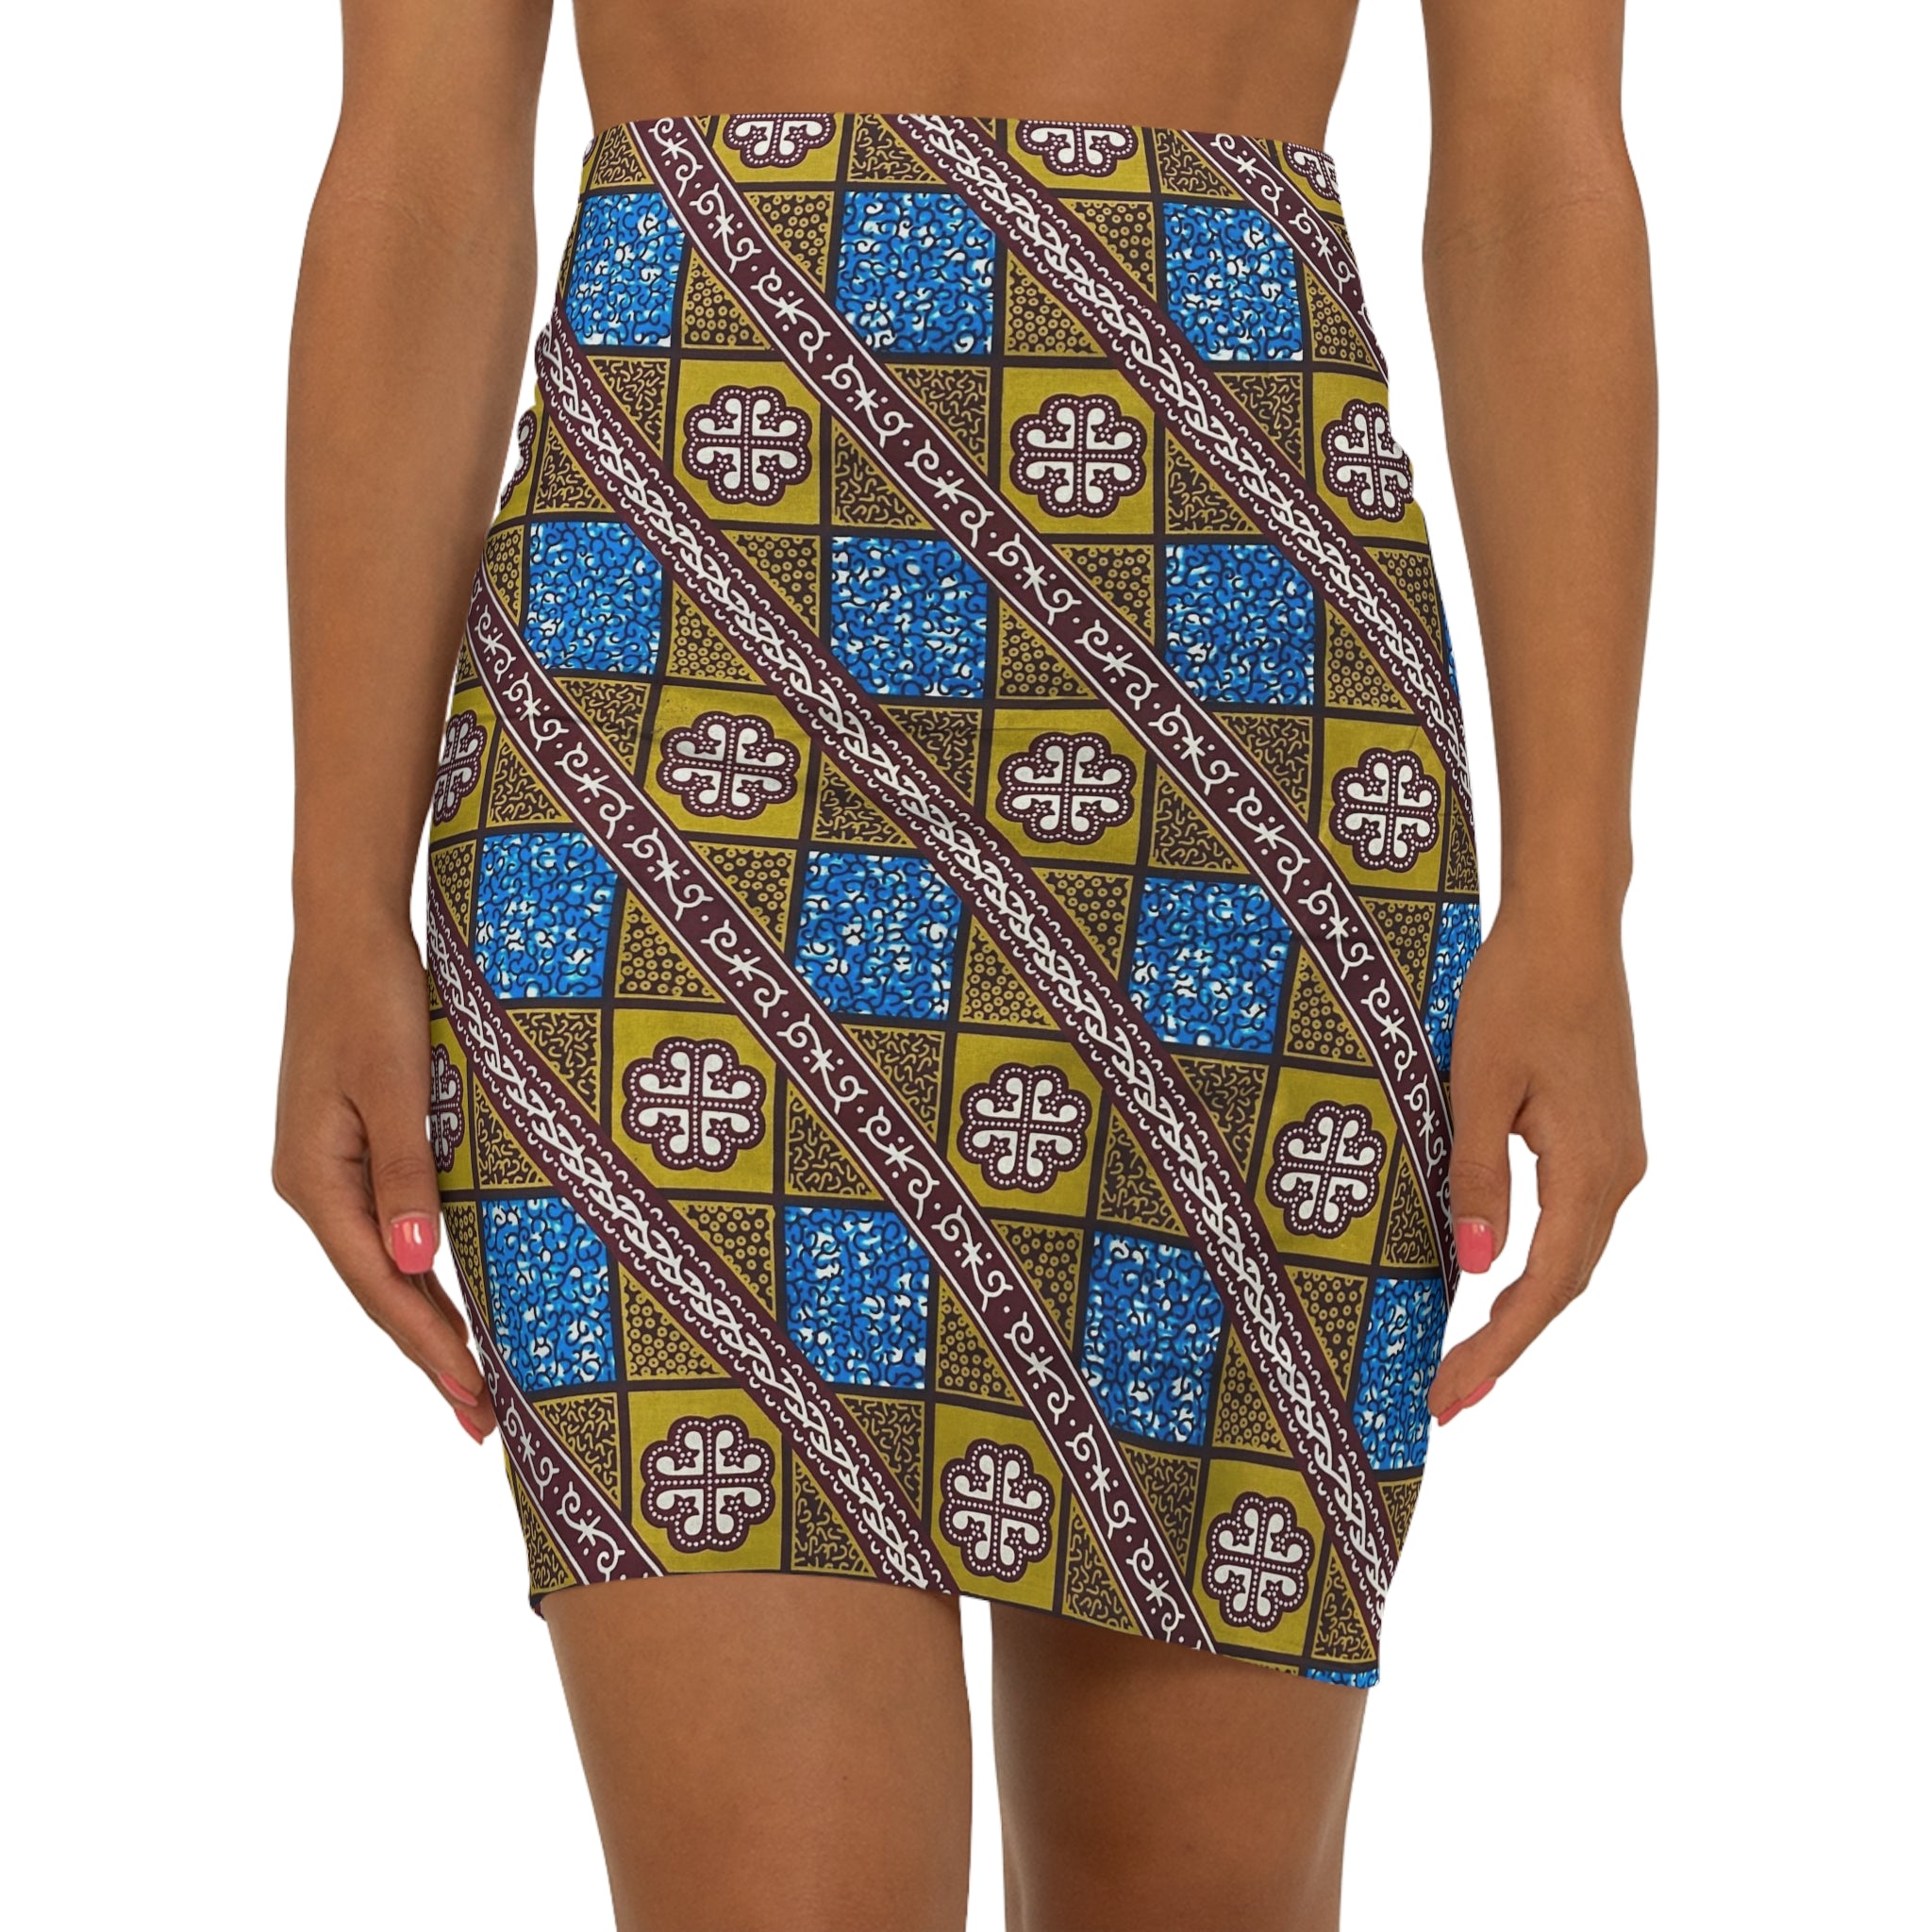 Denim Grid Fusion: Chic 100% Cotton Fabric, 44" Wide - Modern Elegance with a Twist